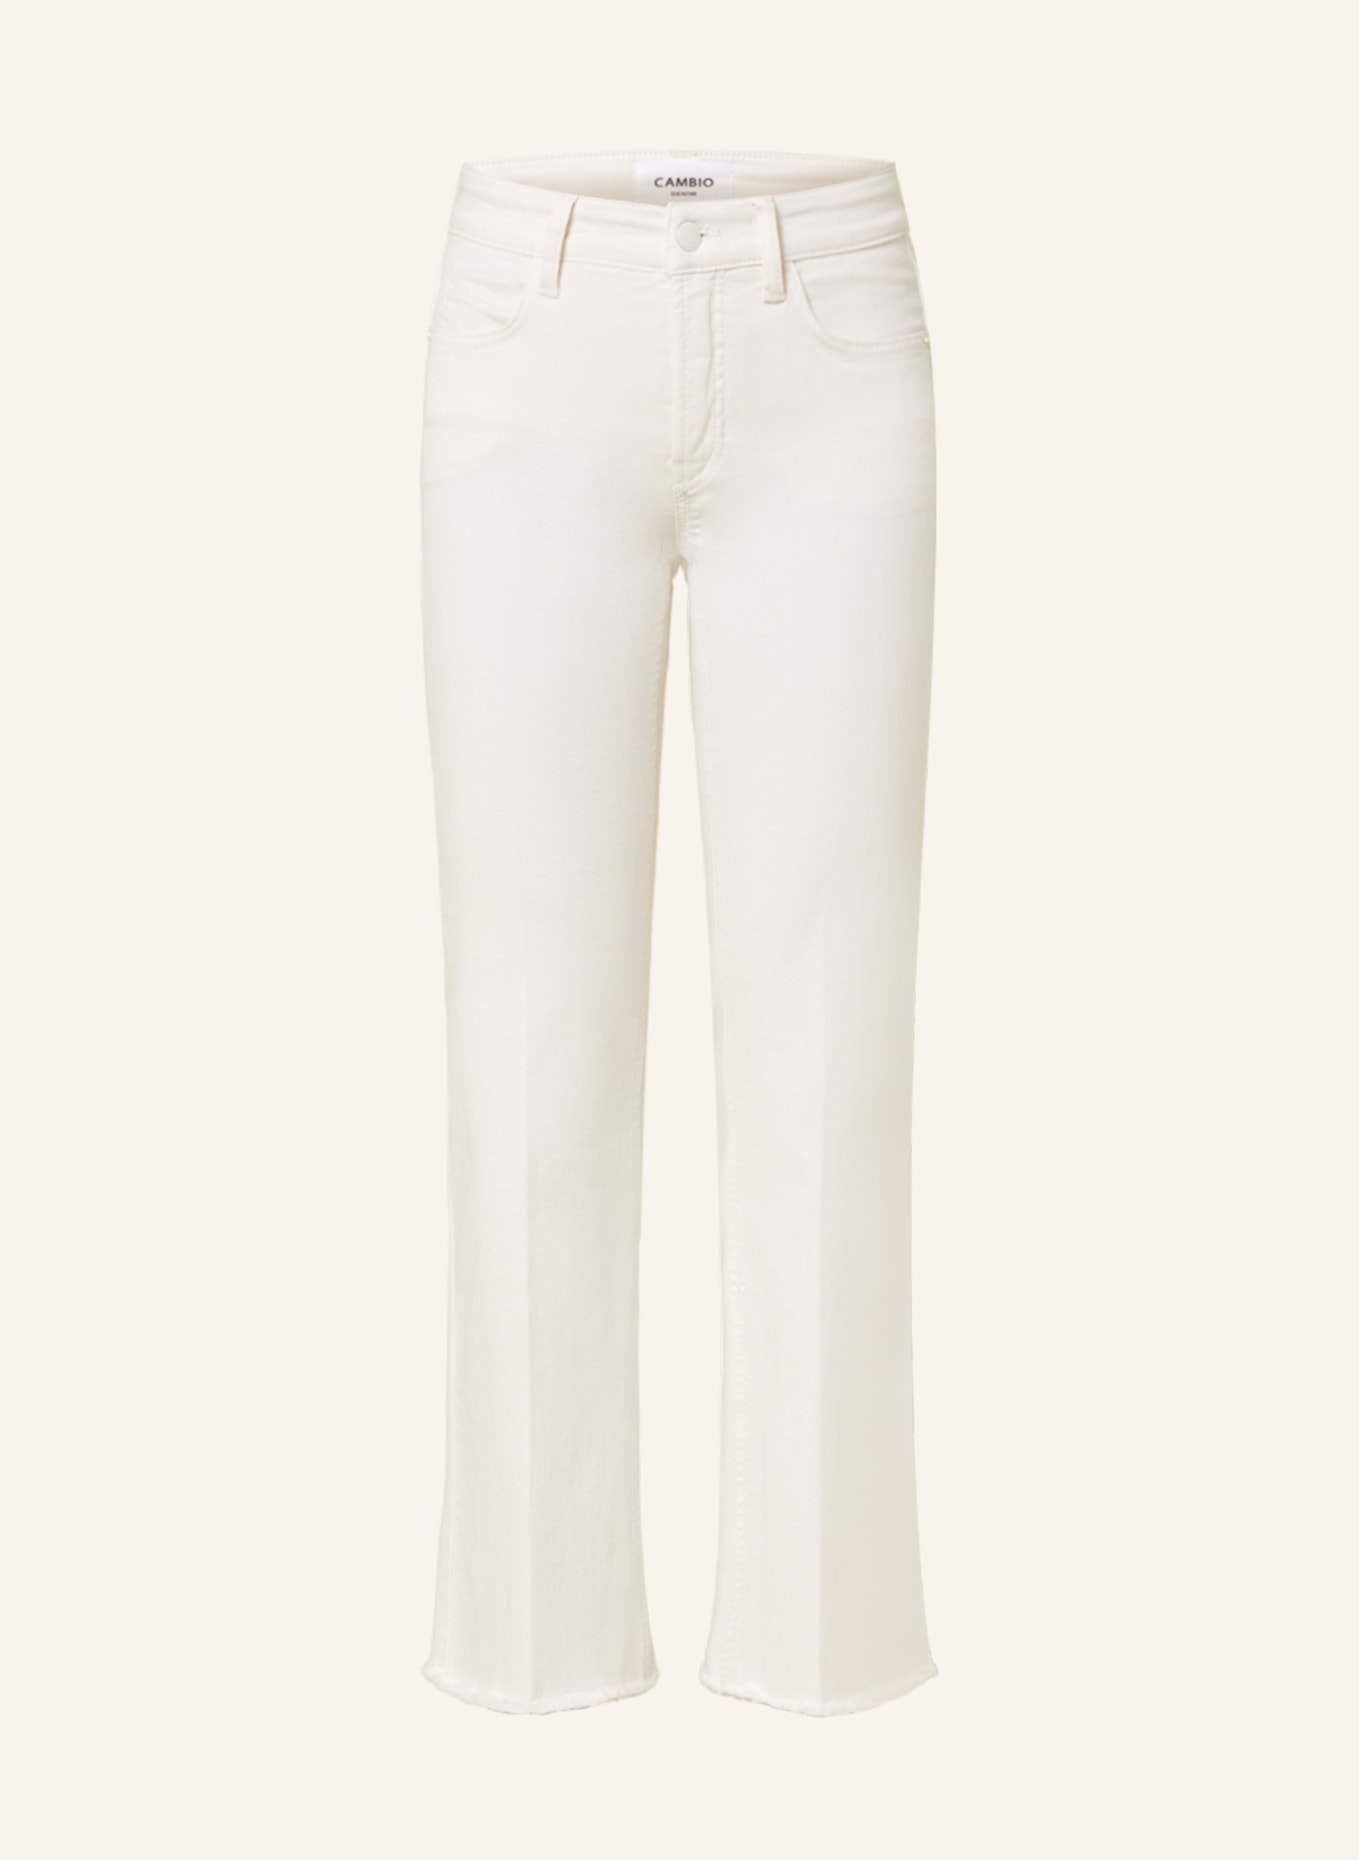 CAMBIO Culotte jeans FRANCESCA, Color: 706 sand (Image 1)